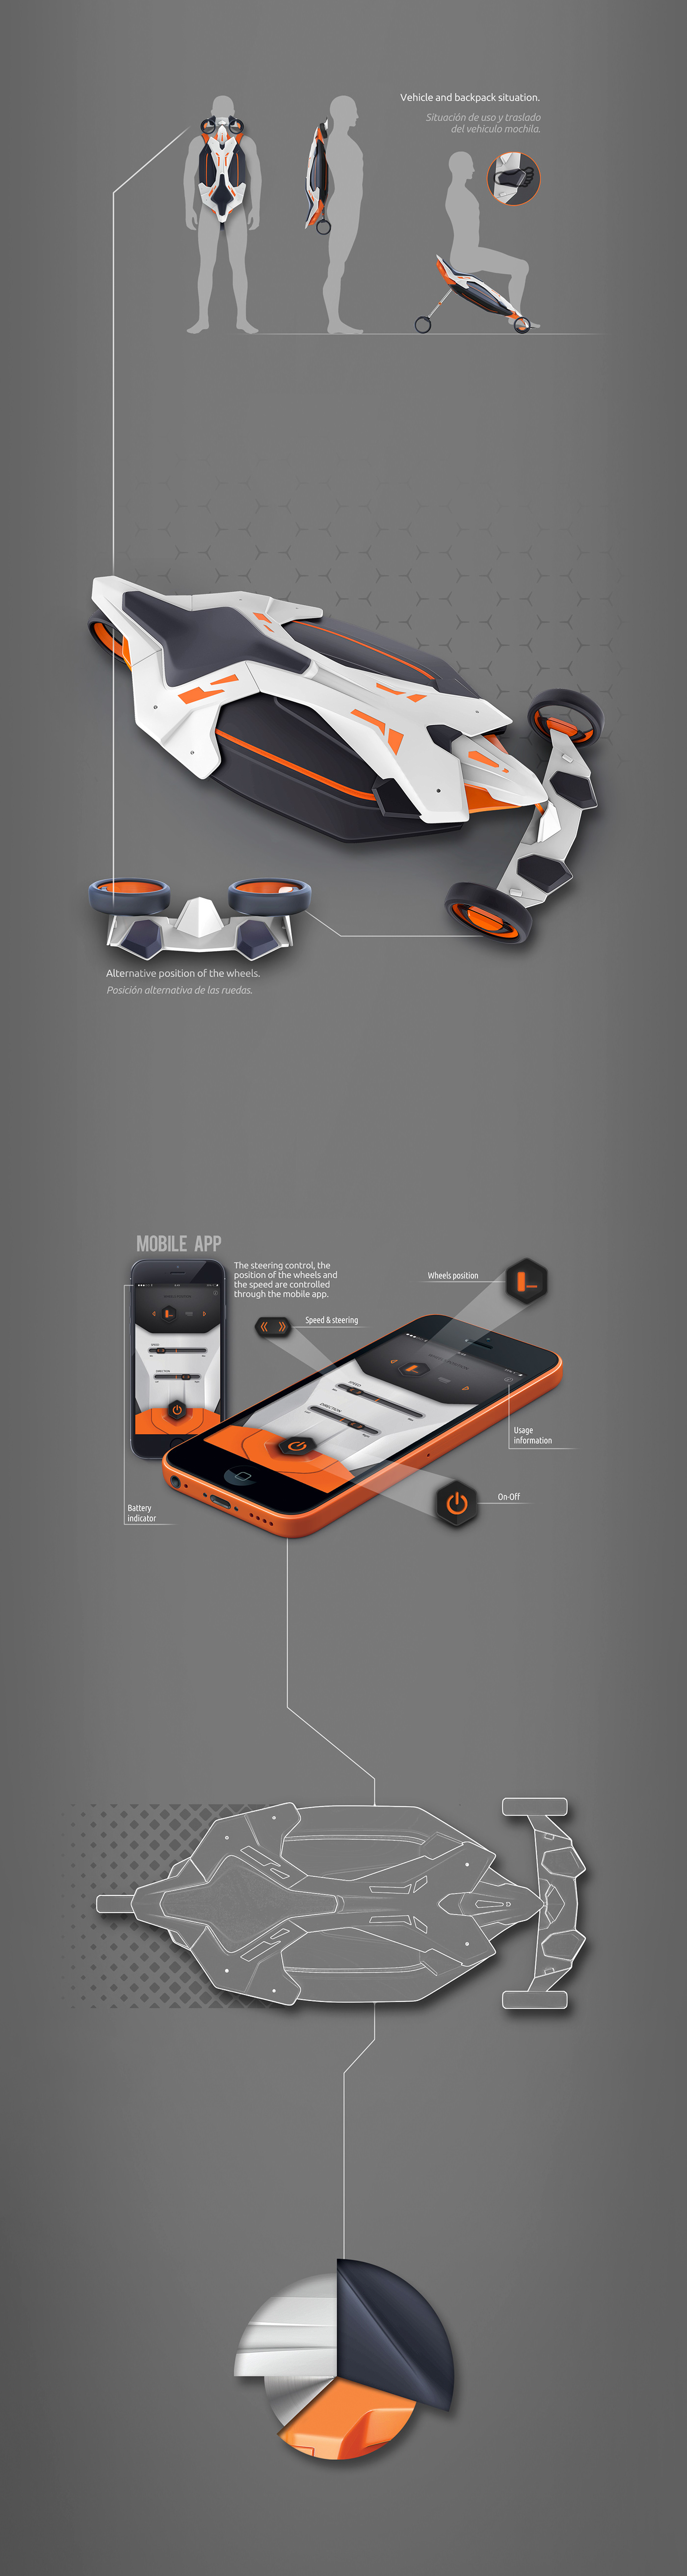 KTM backpack Vehicle concept design product bienal fadu uba sketches